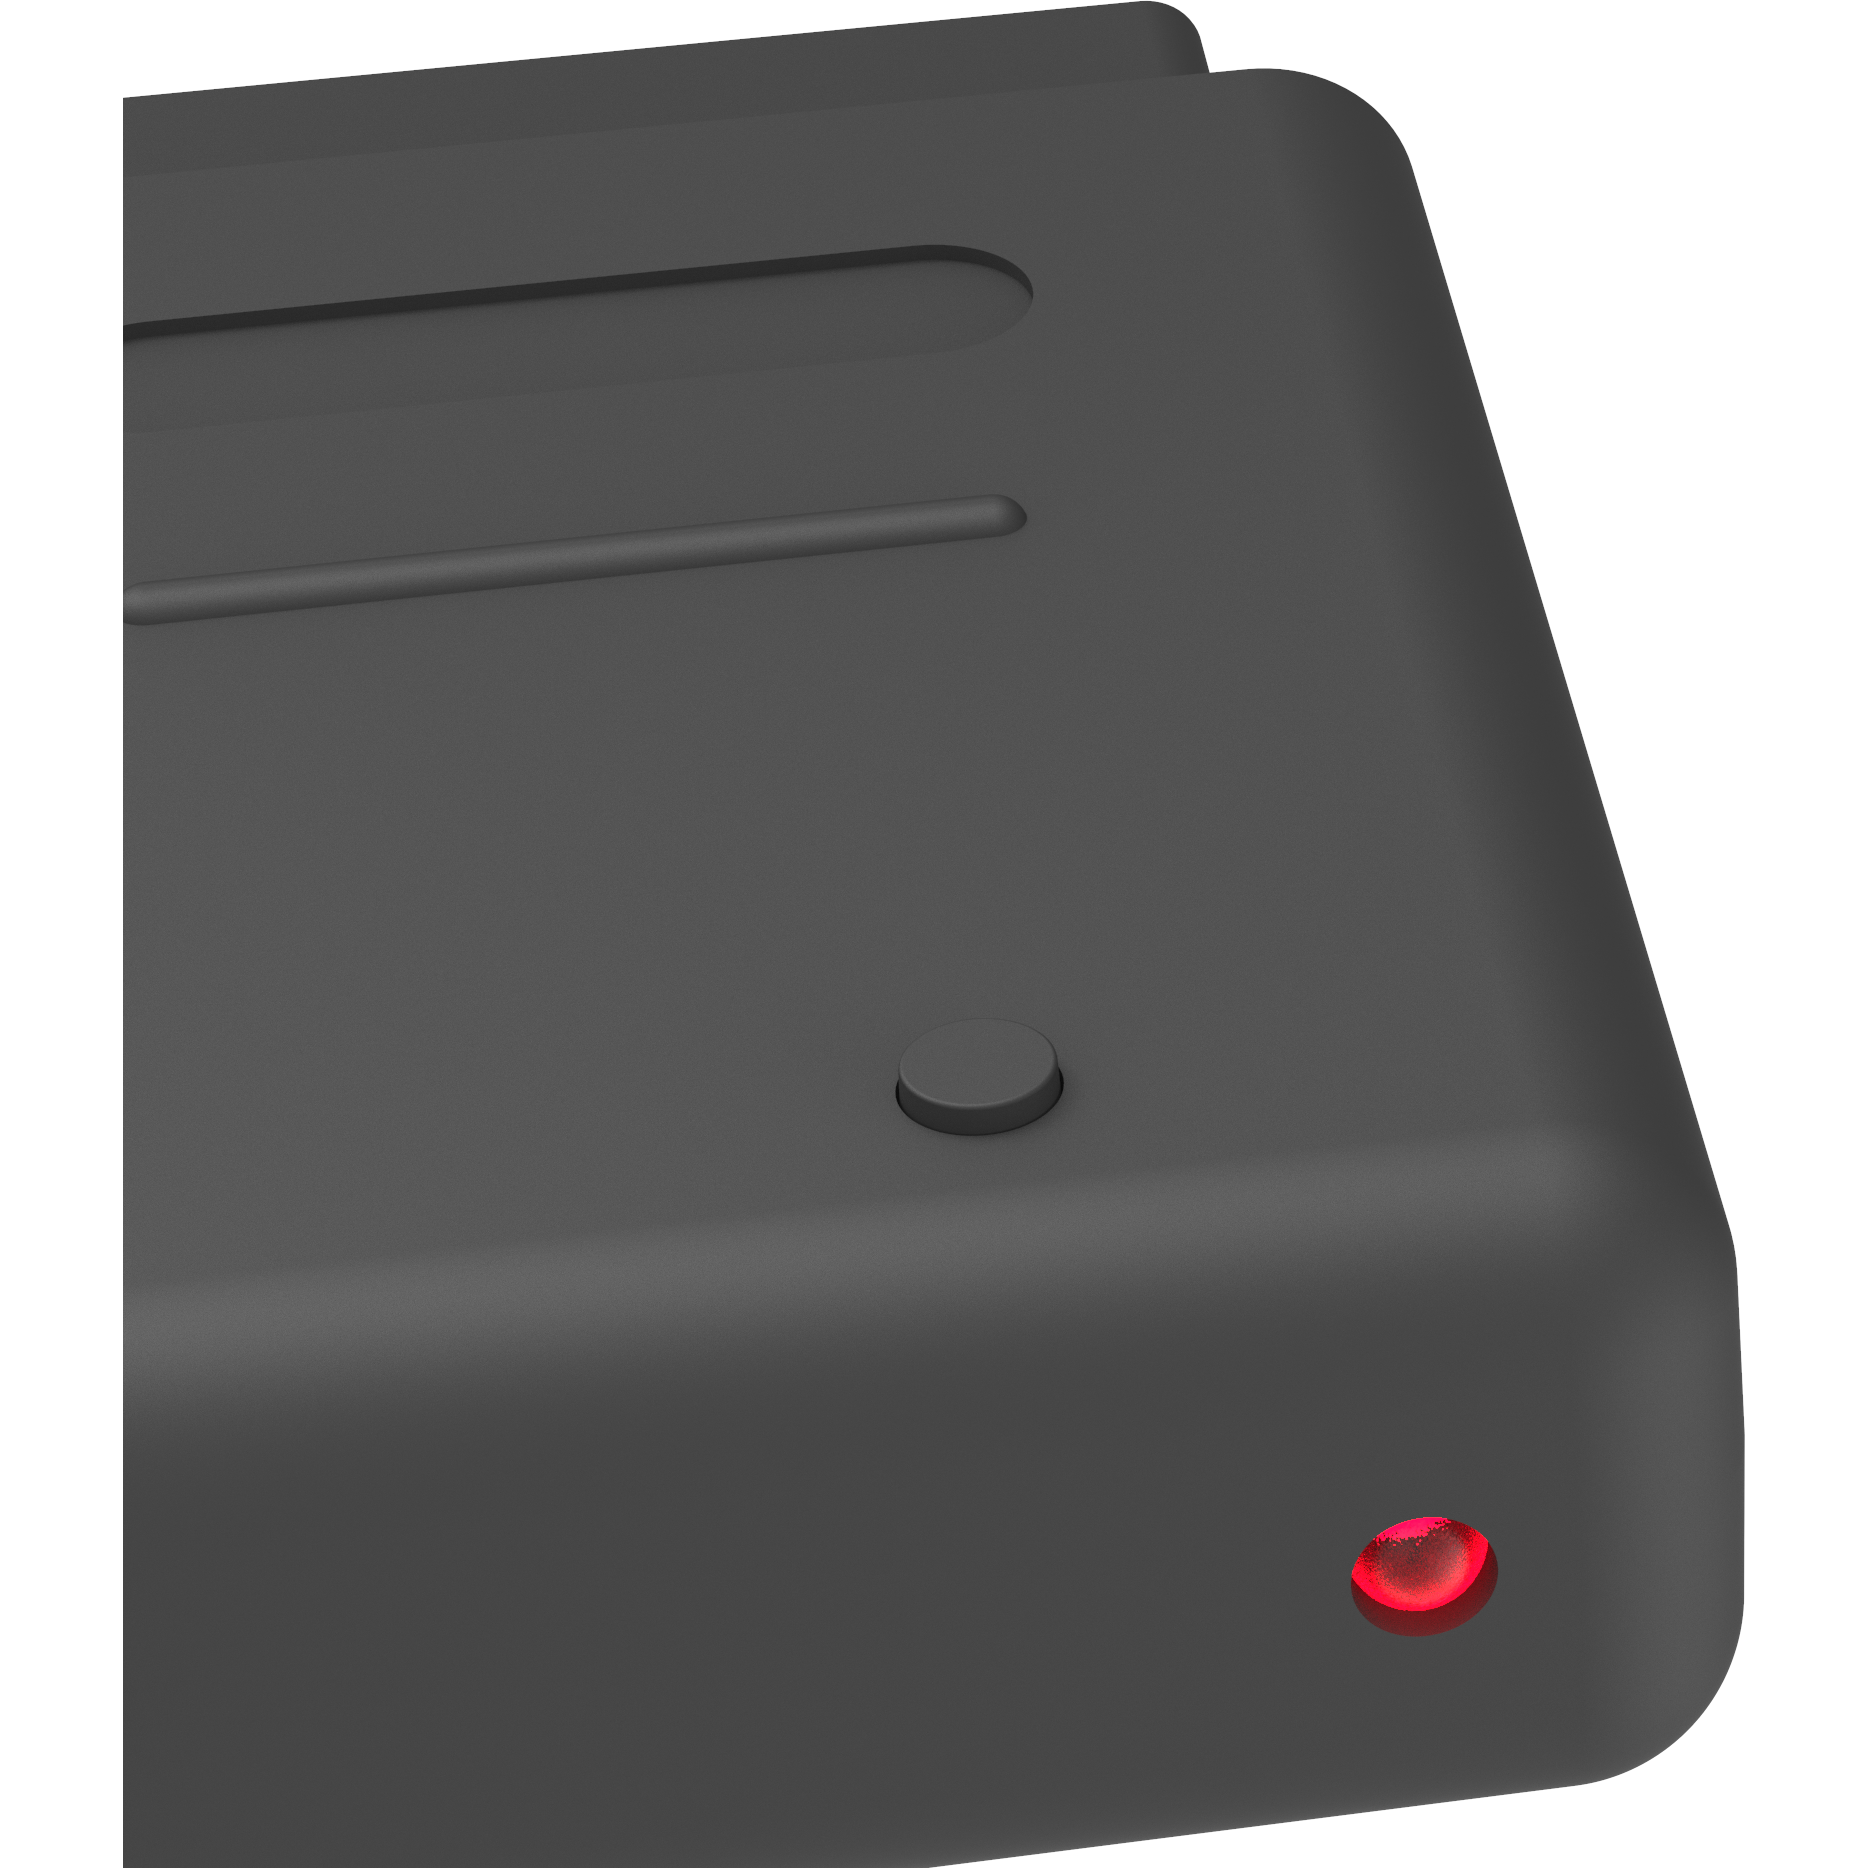 Retro-Bit Legacy16 2.4GHz Wireless Controller - Black - CastleMania Games